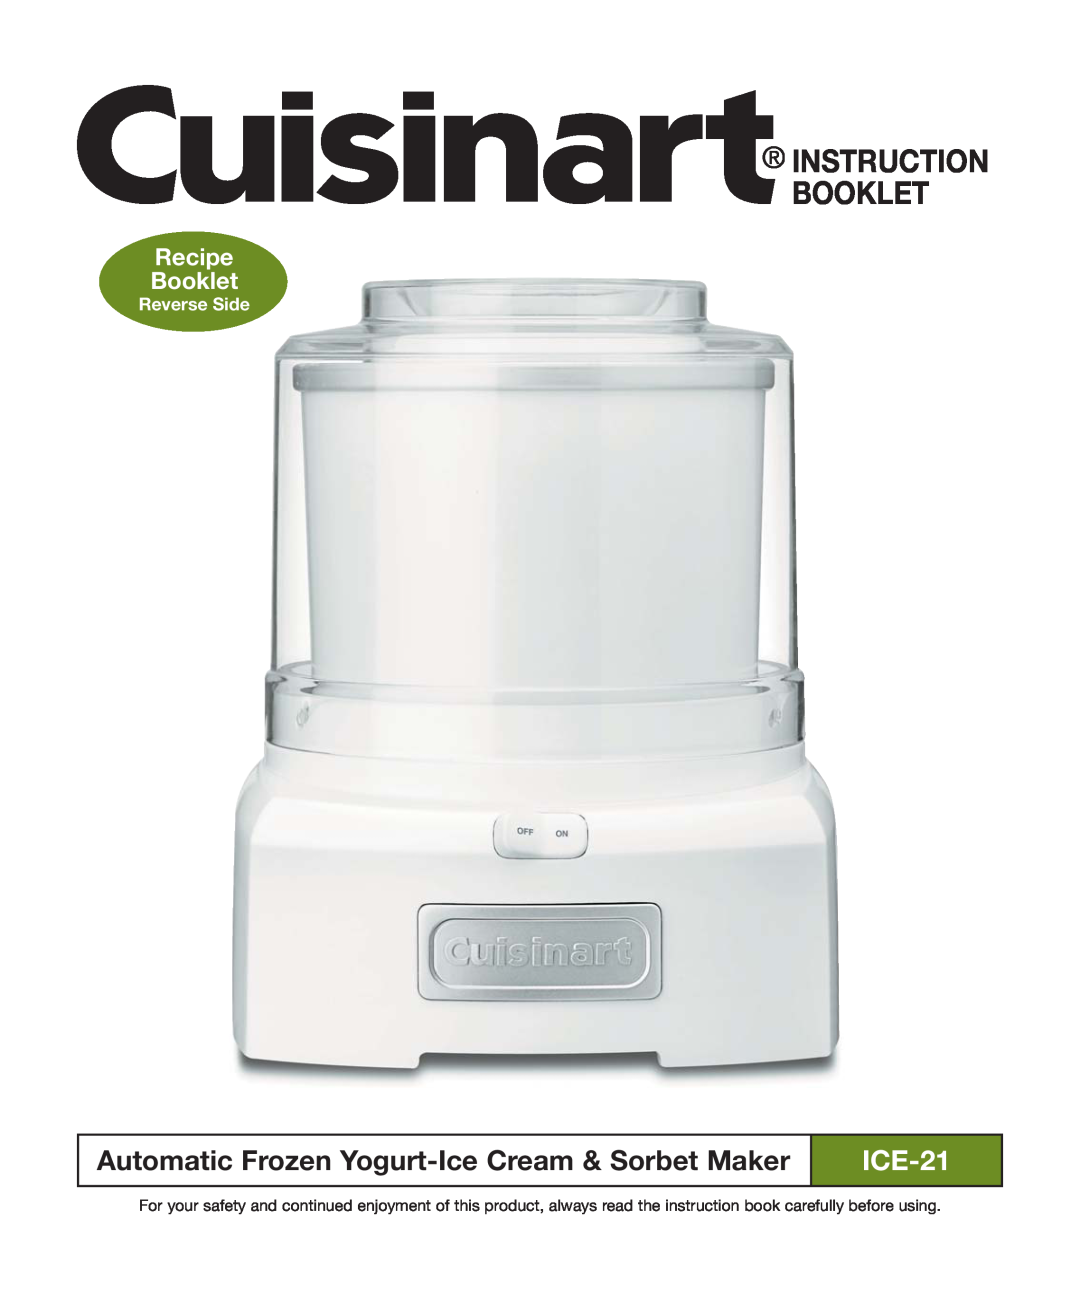 Cuisinart ICE-21R manual Instruction Booklet, Automatic Frozen Yogurt-Ice Cream & Sorbet Maker, Recipe Booklet 